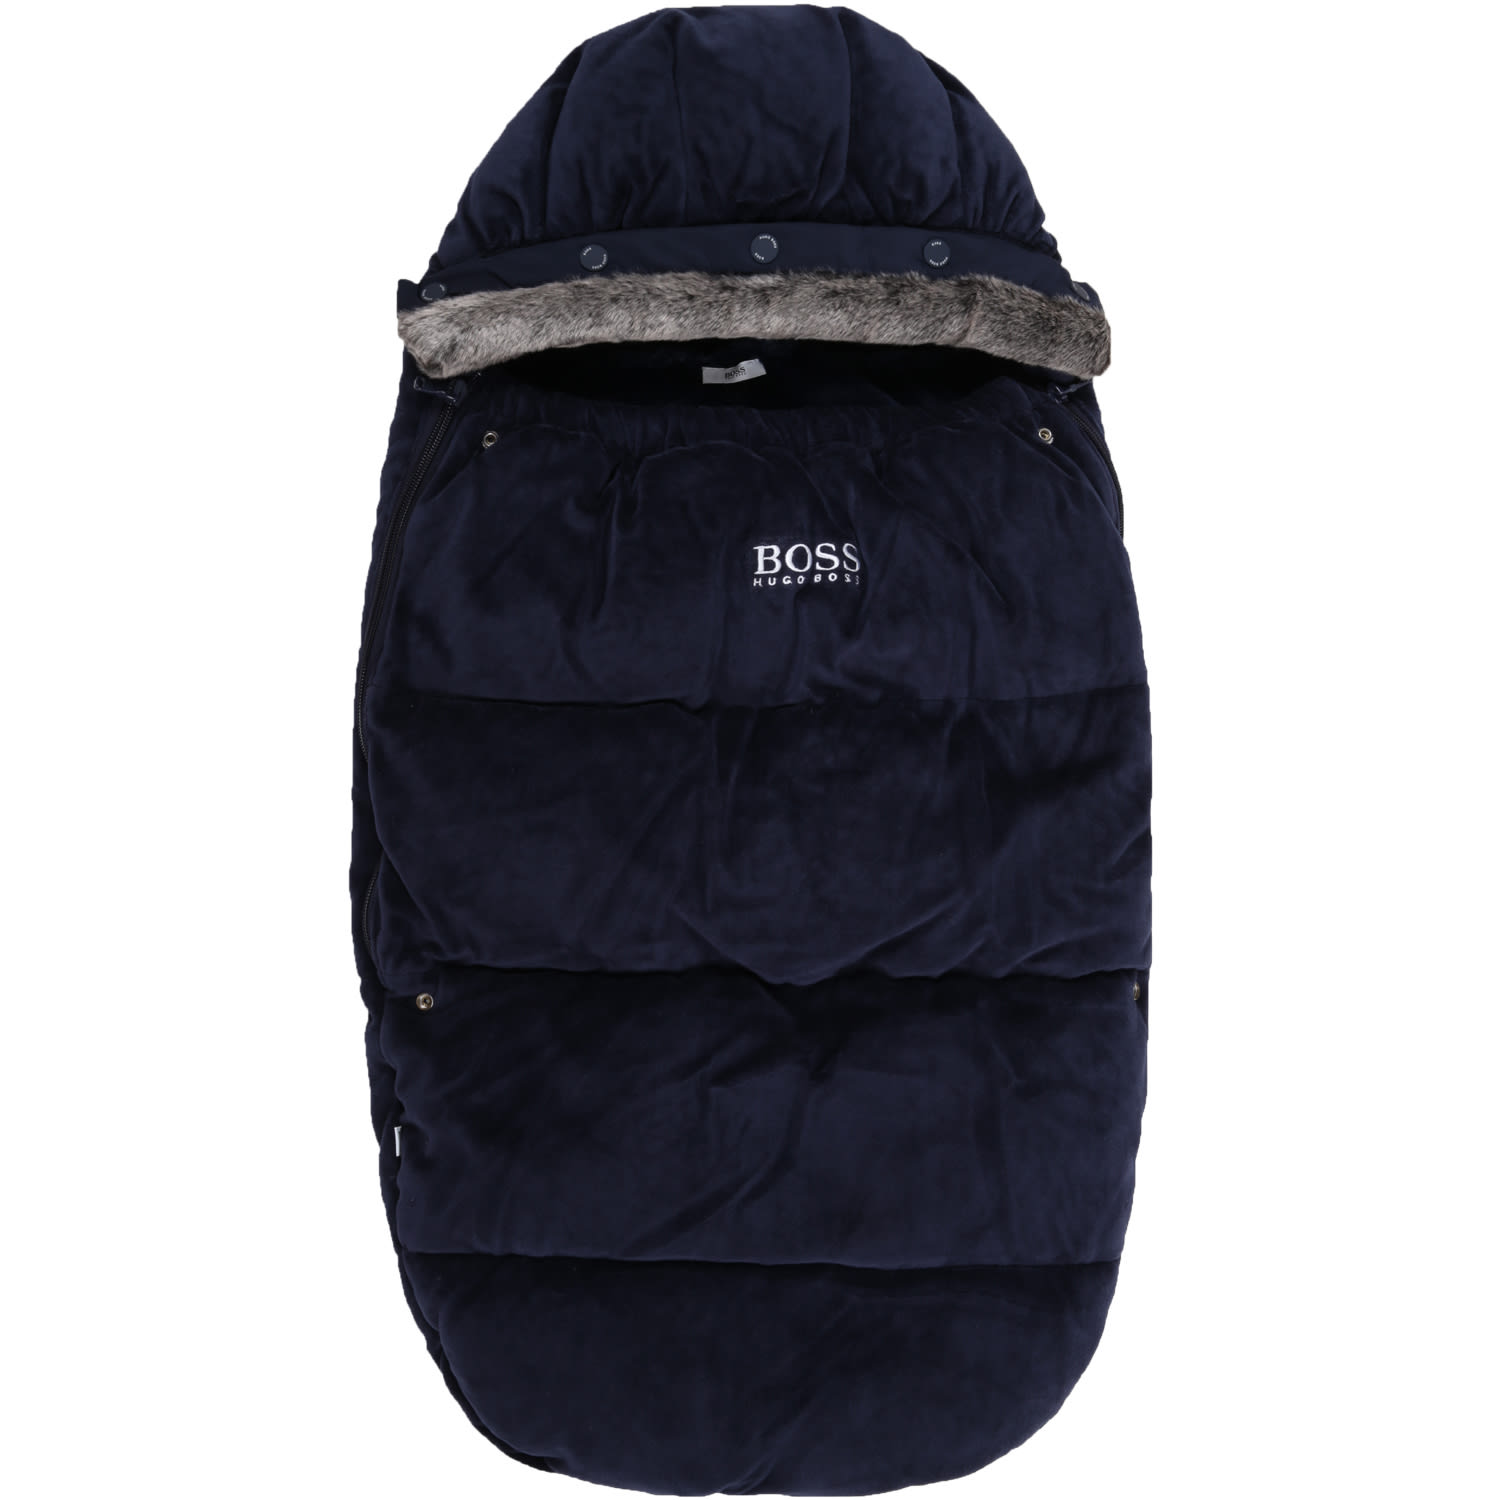 Hugo Boss Blue Sleeping Bag For Baby Boy With Logo